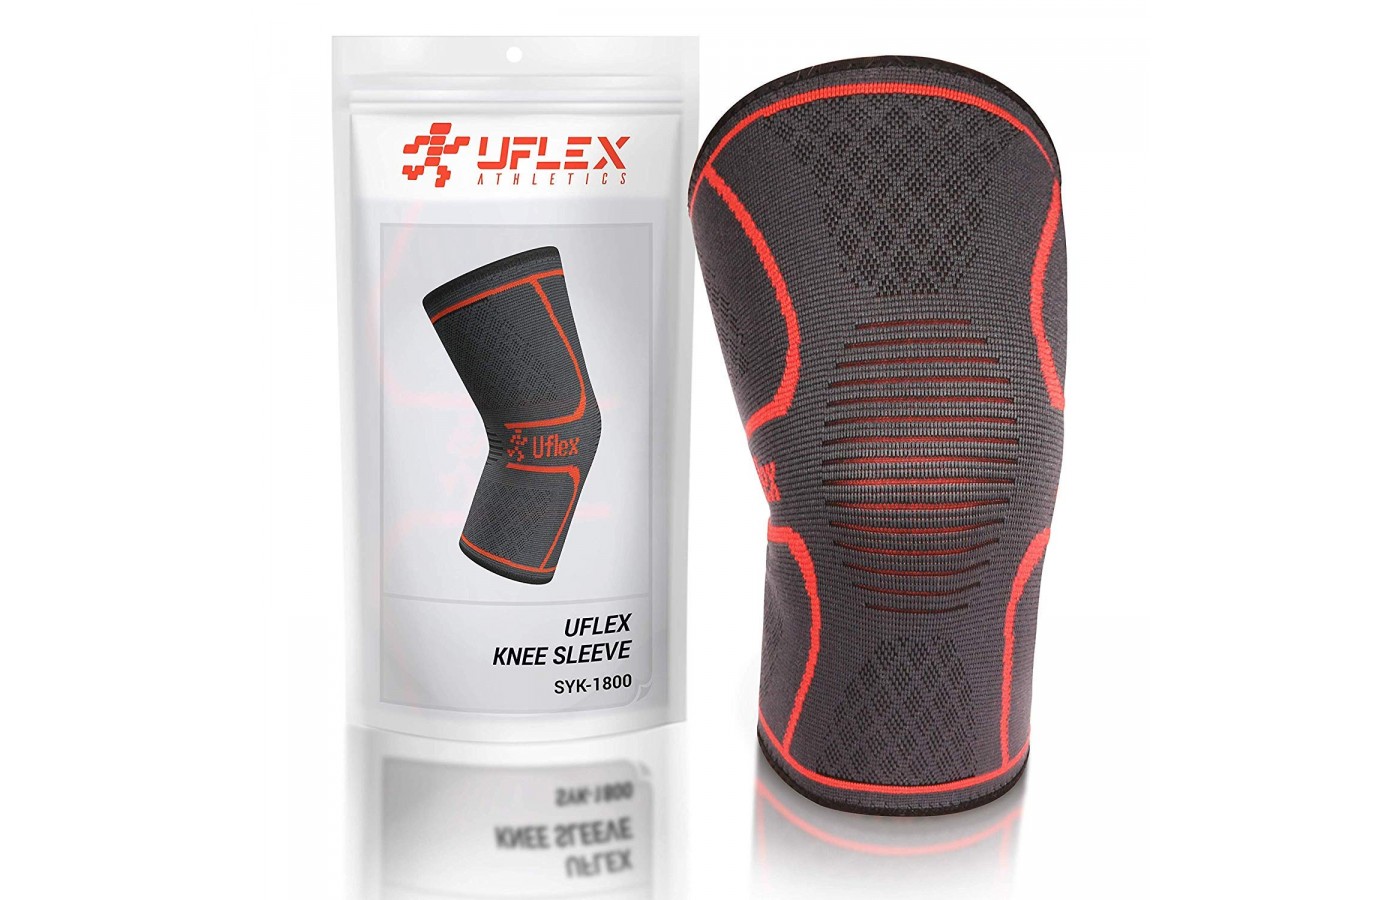 UFlex Athletics Knee Sleeve Front and Side